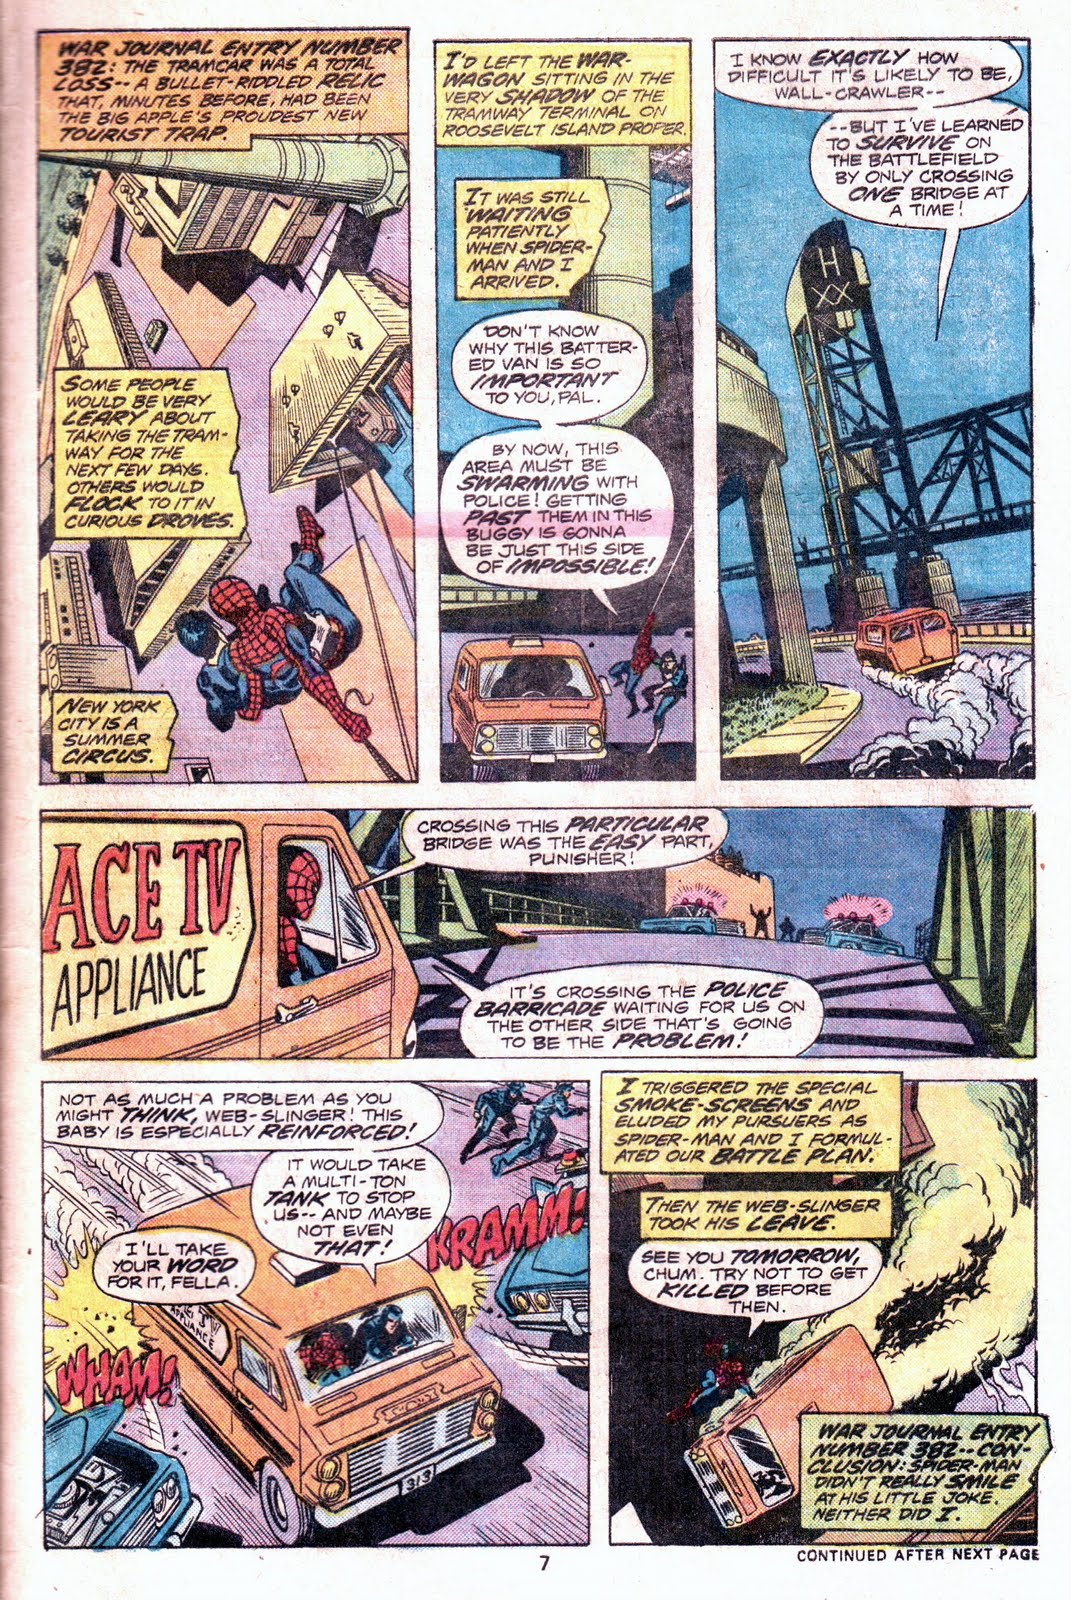 Original Art Stories Ross Andru S Amazing Spider Man 162